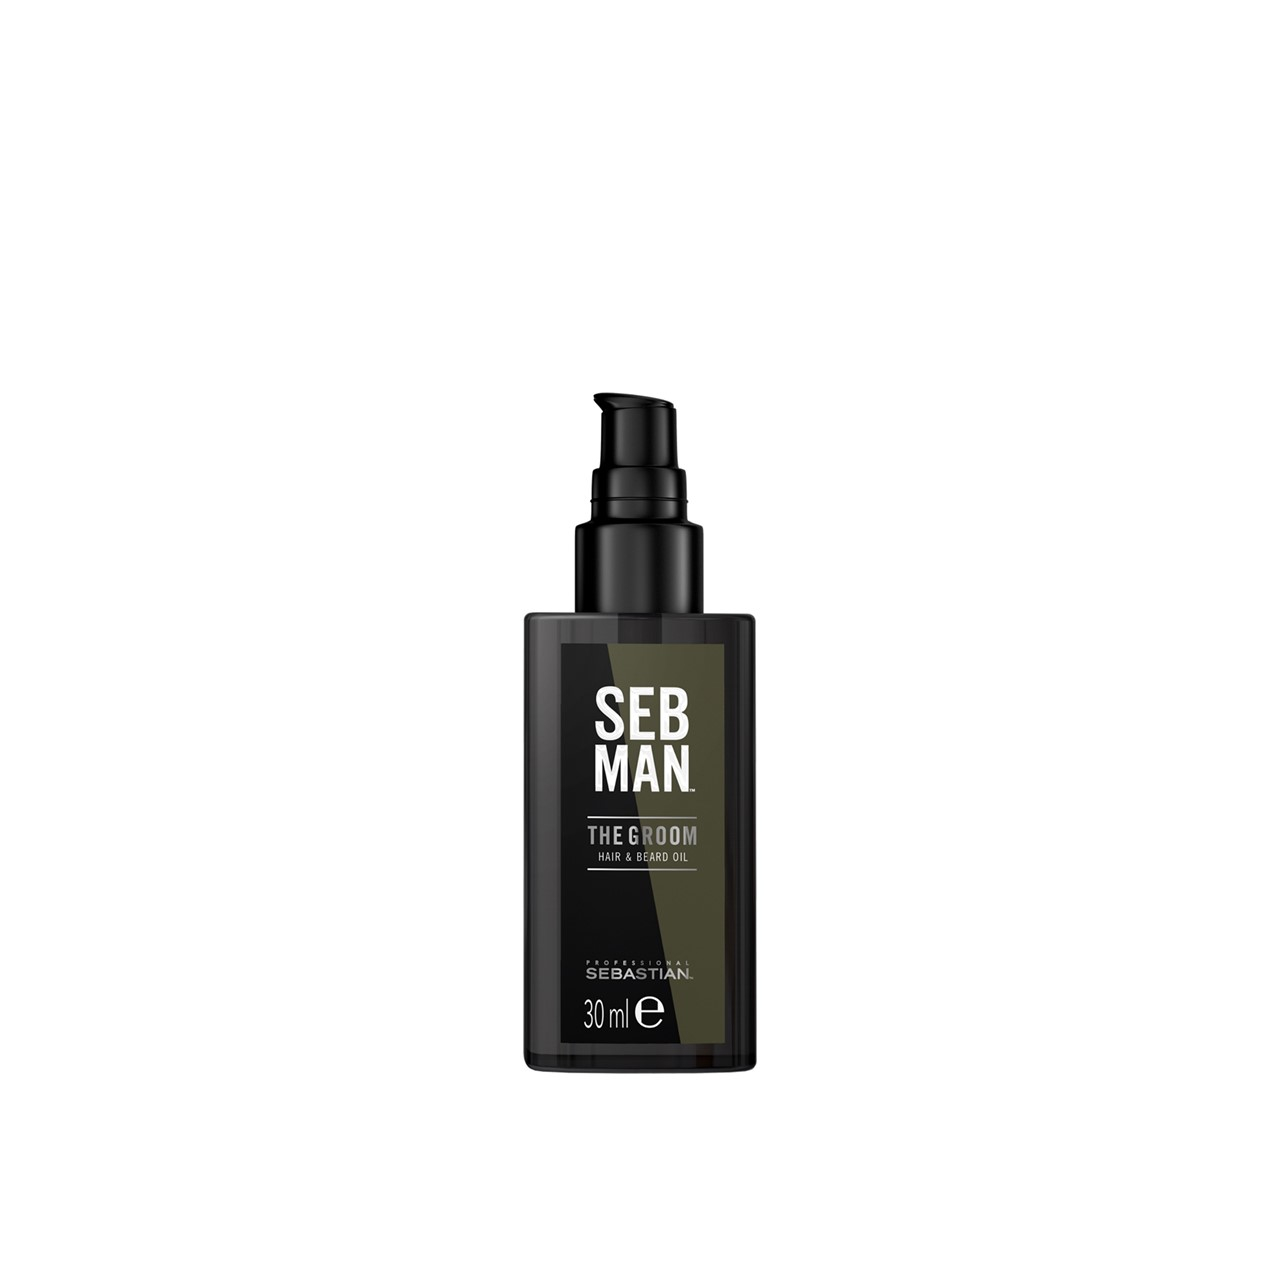 Sebastian SEB MAN The Groom Hair & Beard Oil 30ml (1.01fl oz)